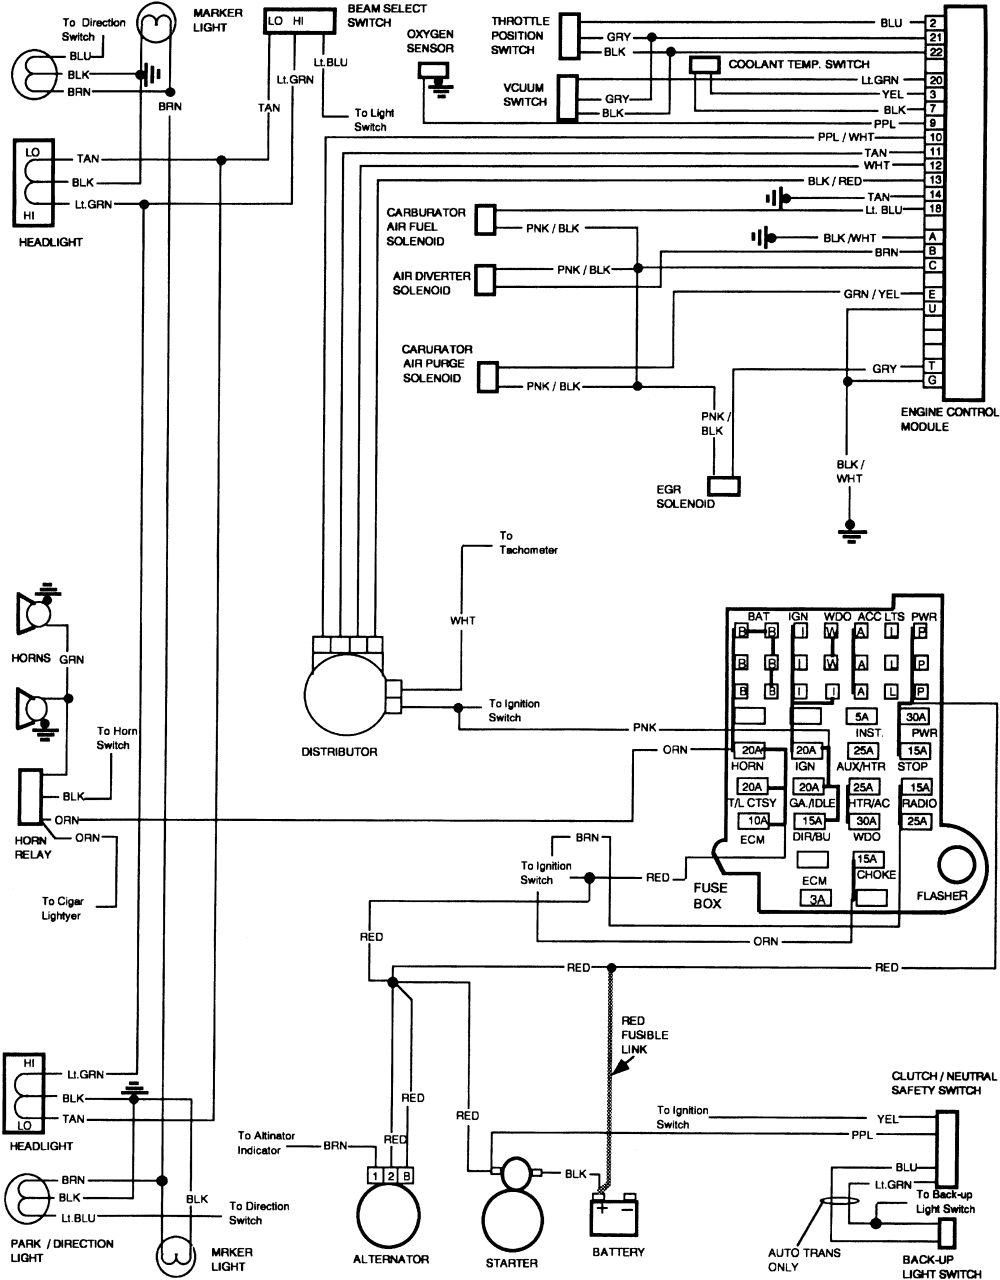 Need wiring diagram for an '85 Chevy C30 Siverado truck - Geo Metro Forum 63 Chevy Truck Wiring Diagram Geo Metro Forum